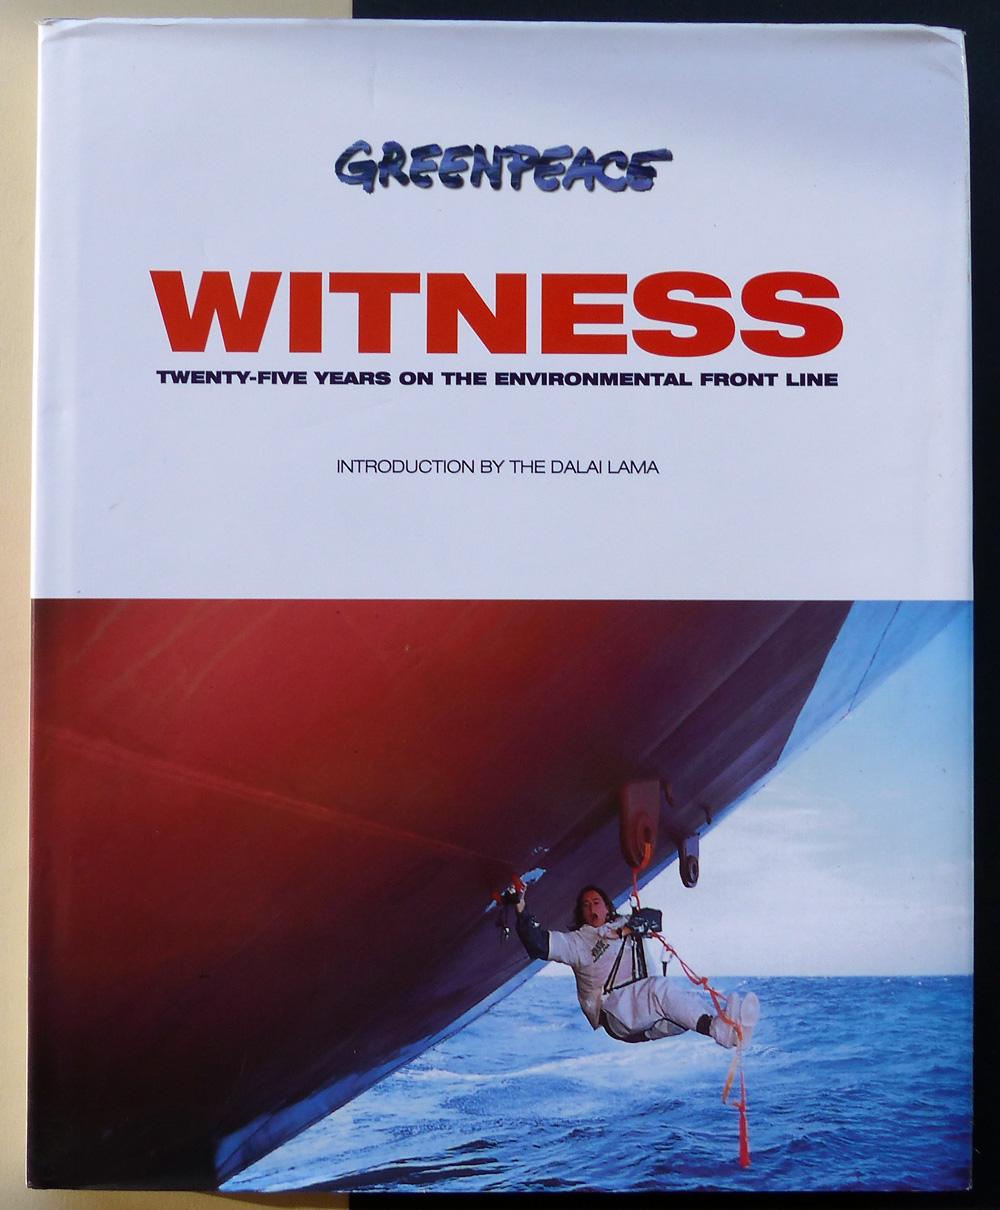 Greenpeace Witness. Twenty-five years on the environmental front line. - Dalai Lama (Introduction)